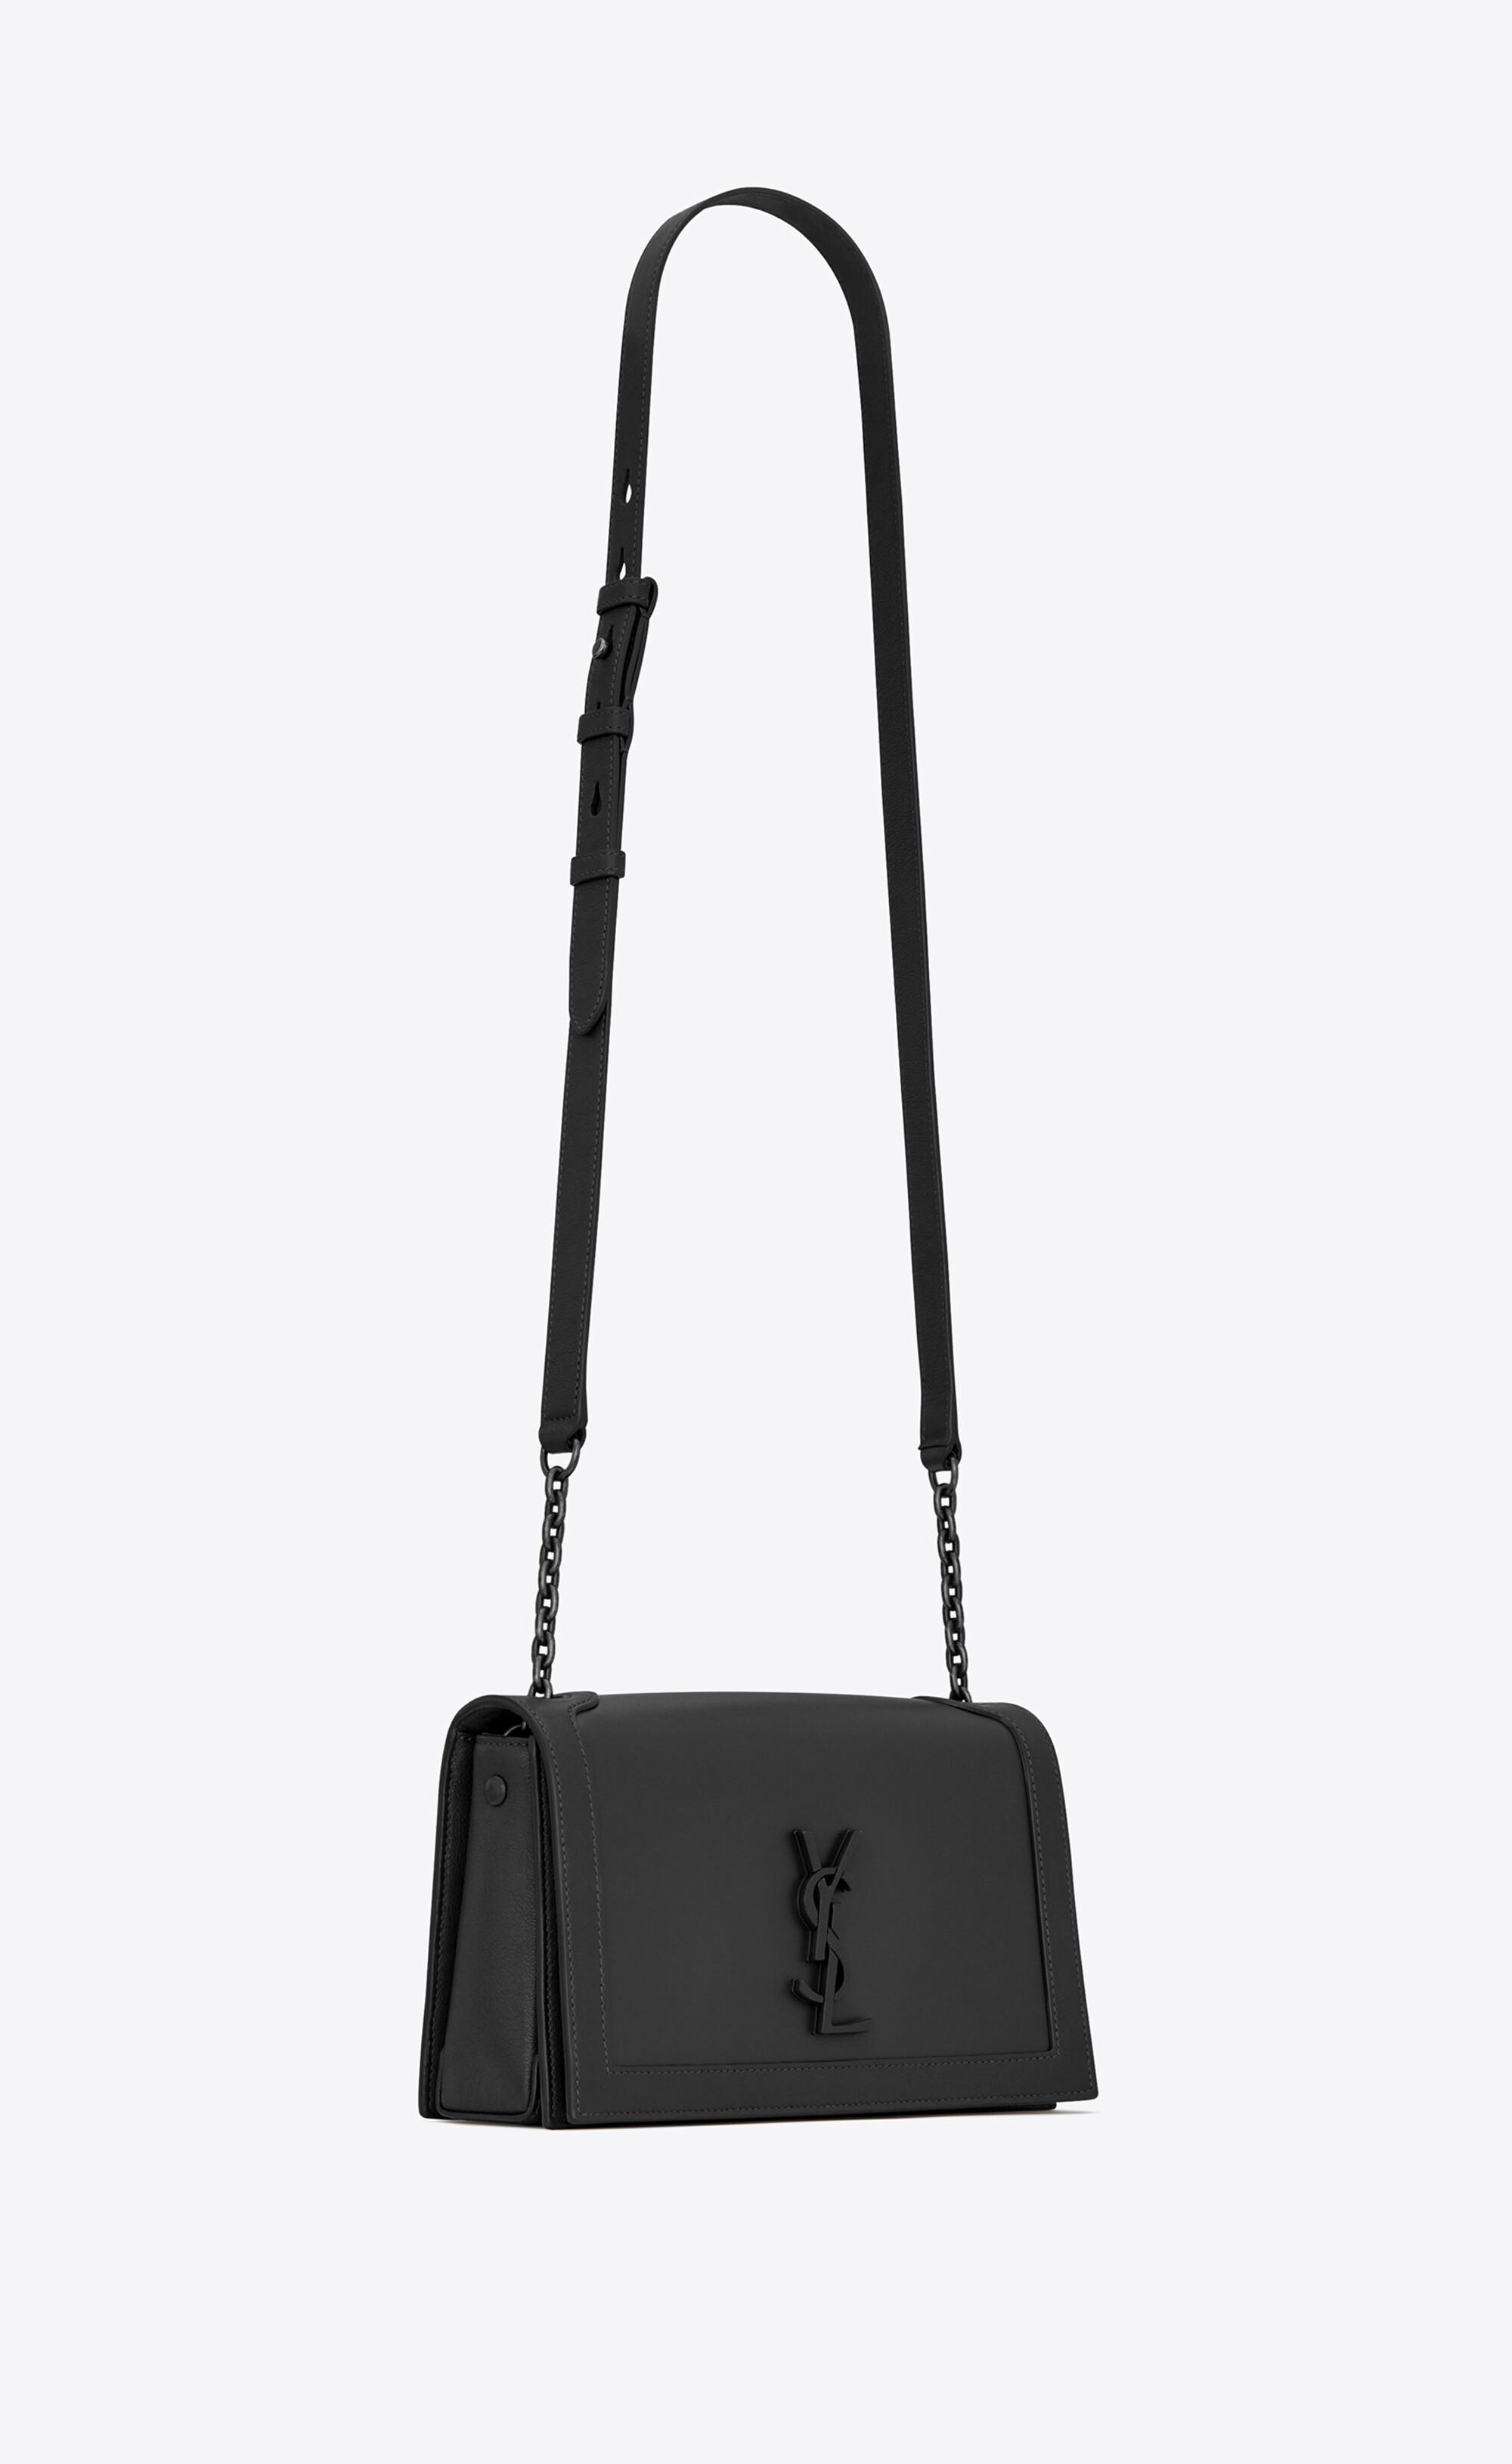 Saint Laurent - Black Smooth Leather Backpack